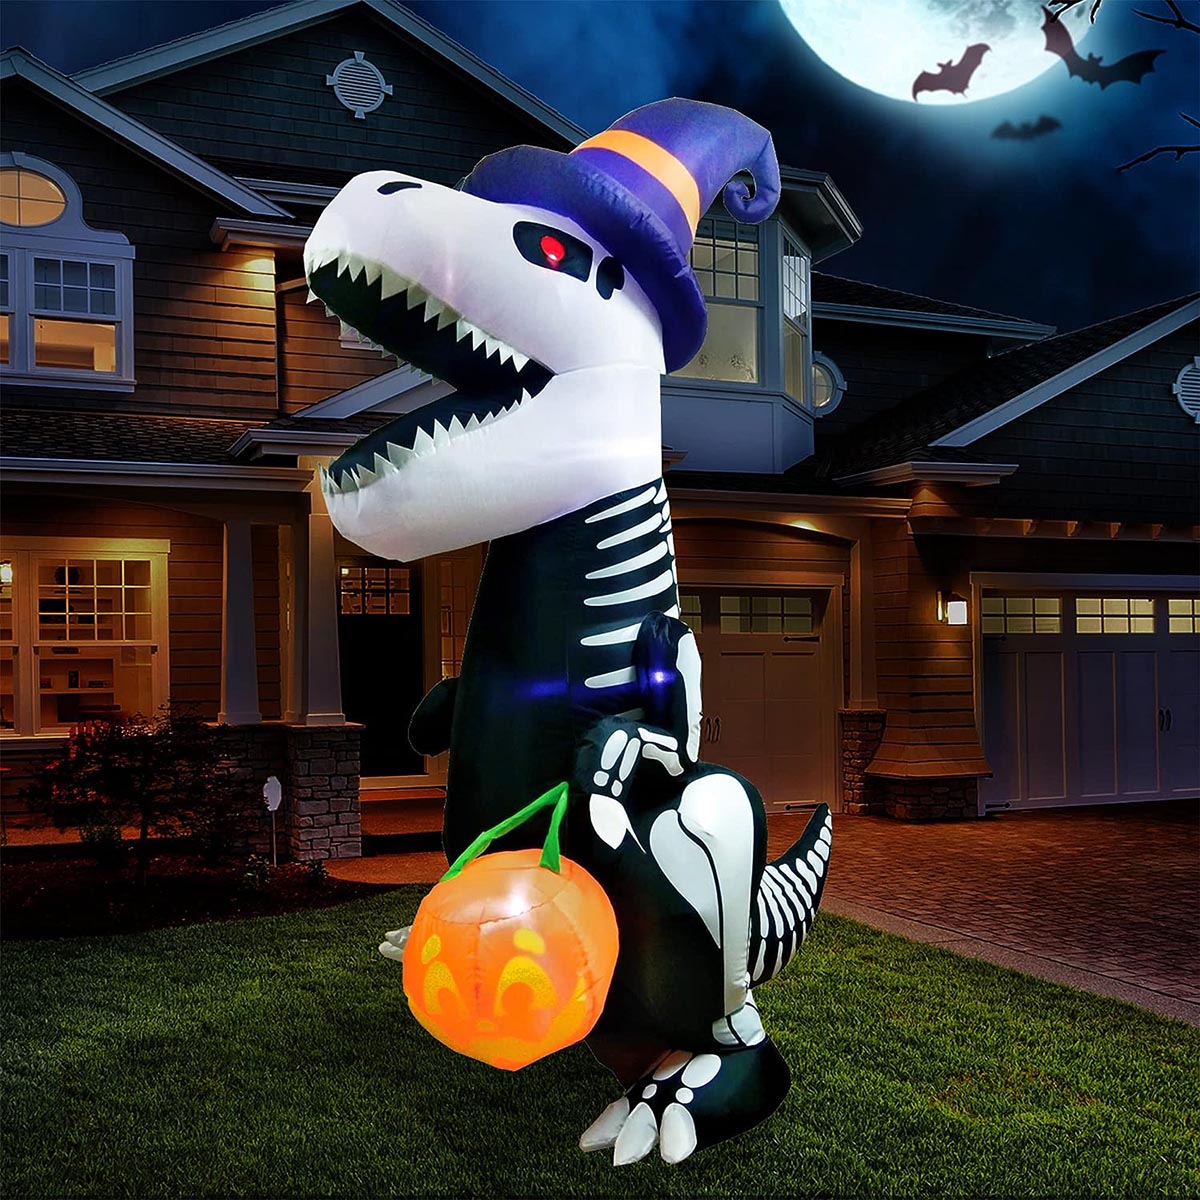 Best Large Halloween Decoration Option Joiedomi Halloween 8 FT Inflatable Skeleton Dinosaur